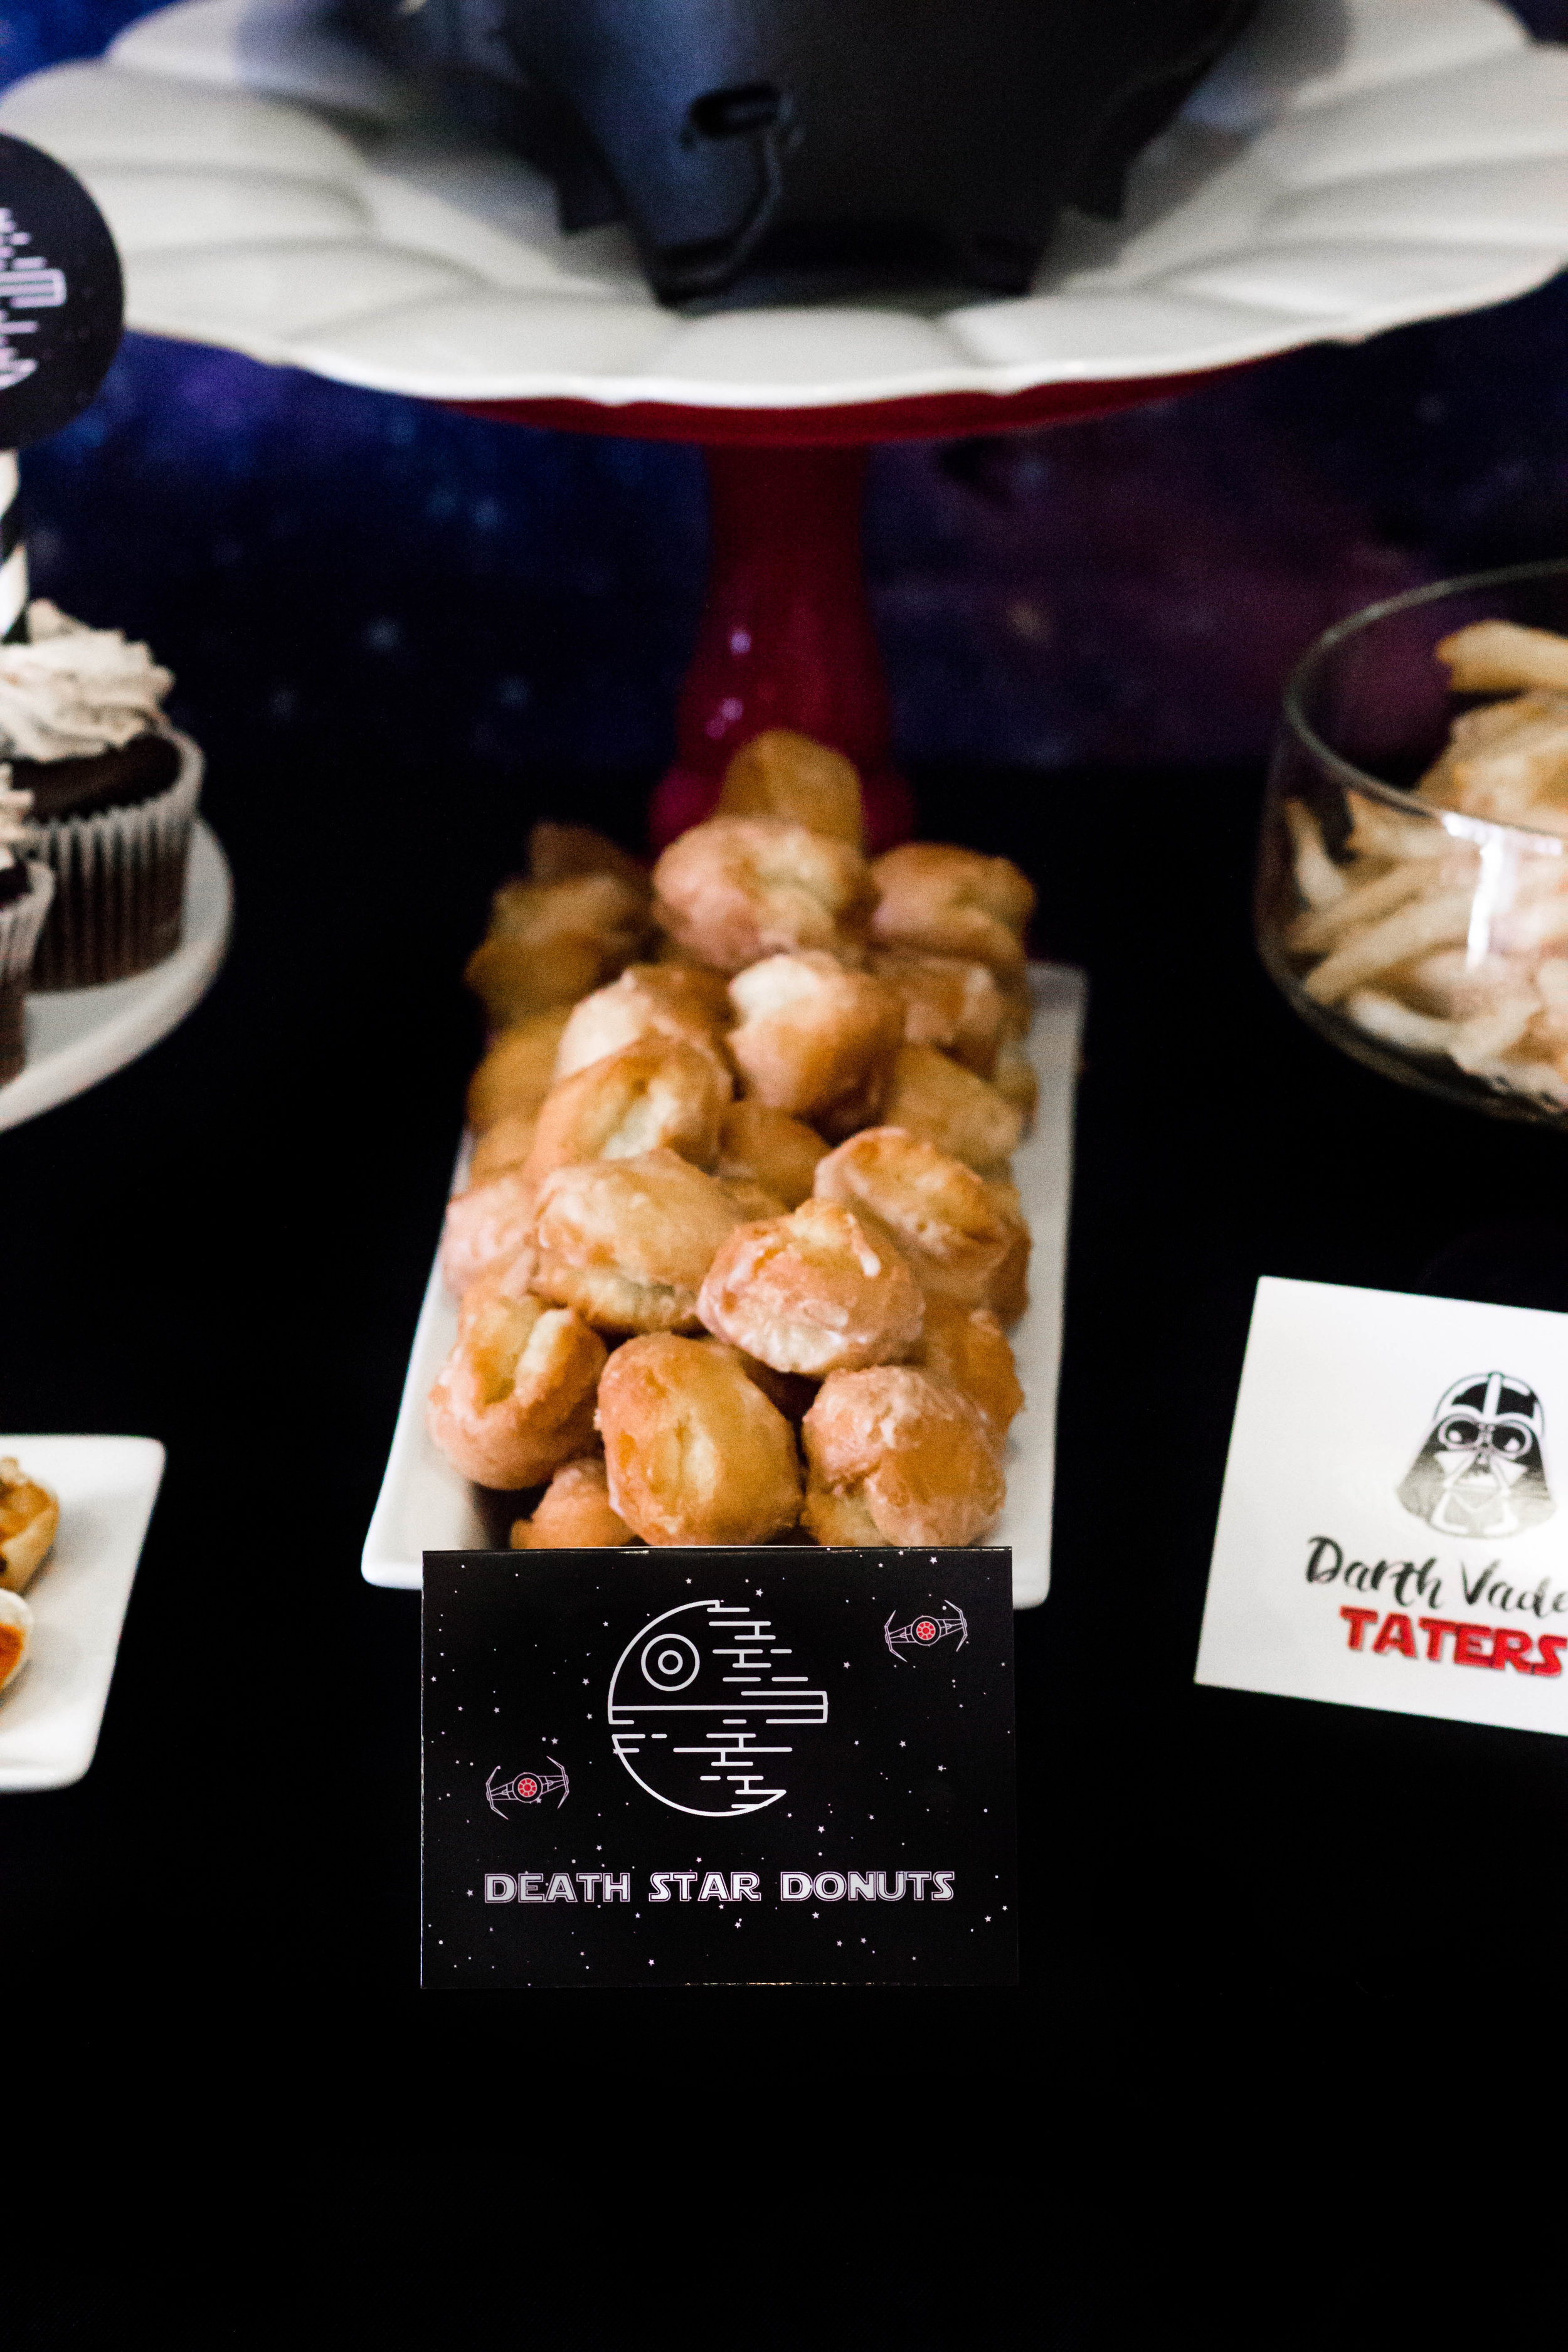 Death star donuts, star wars party food ideas from shopmkkm.com